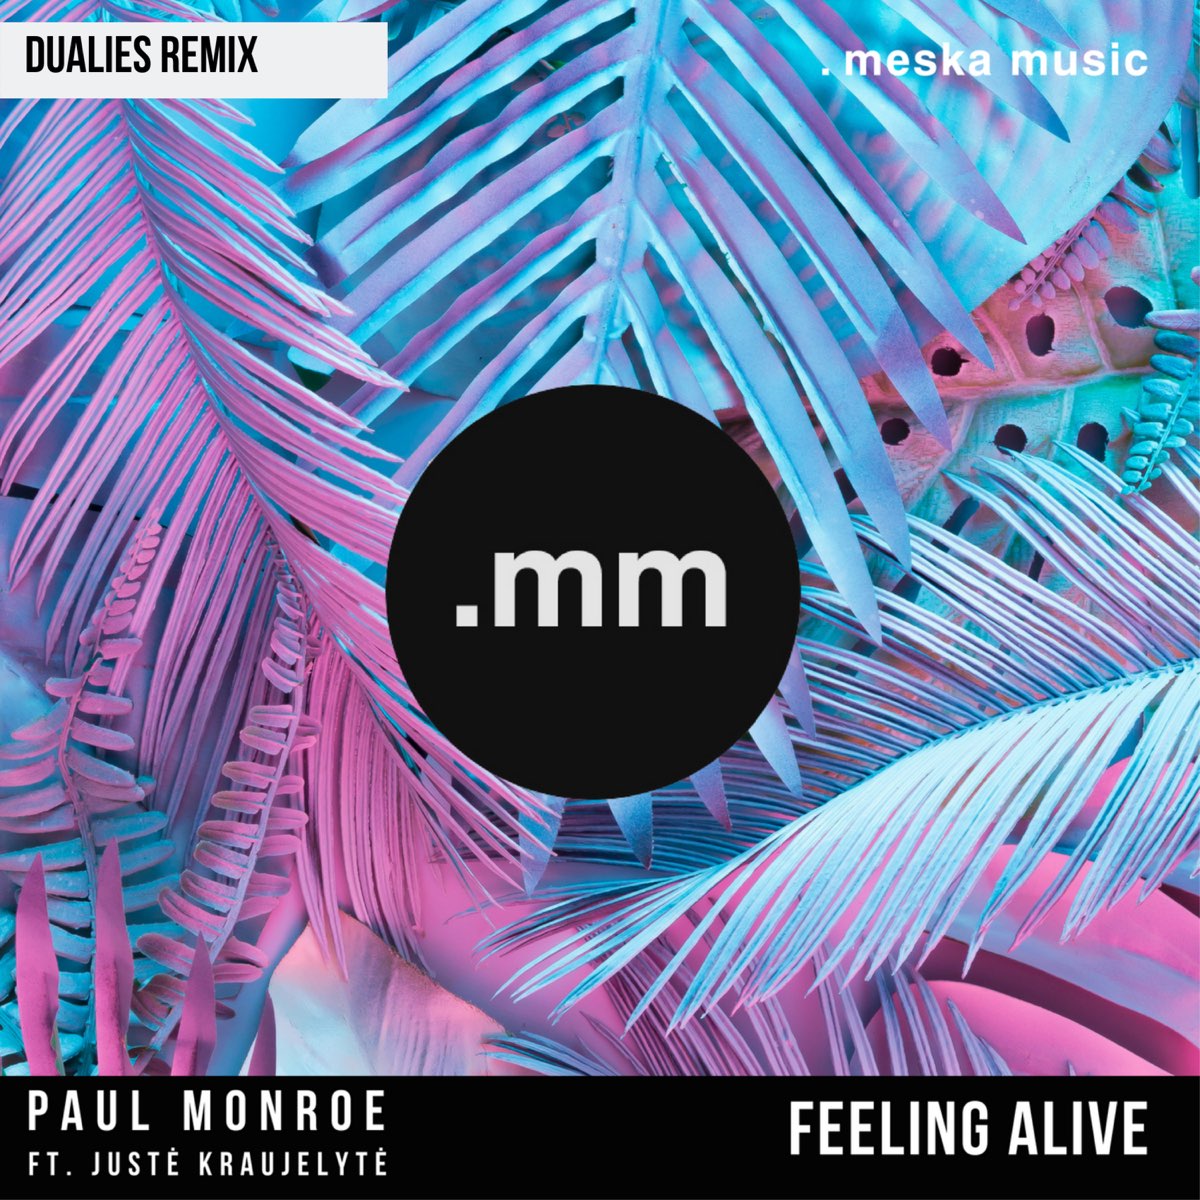 This feeling remix. Paul Monroe. Feeling Alive. Grafix - feel Alive (ft. Lauren l'aimant). Toronto feeling Alive.